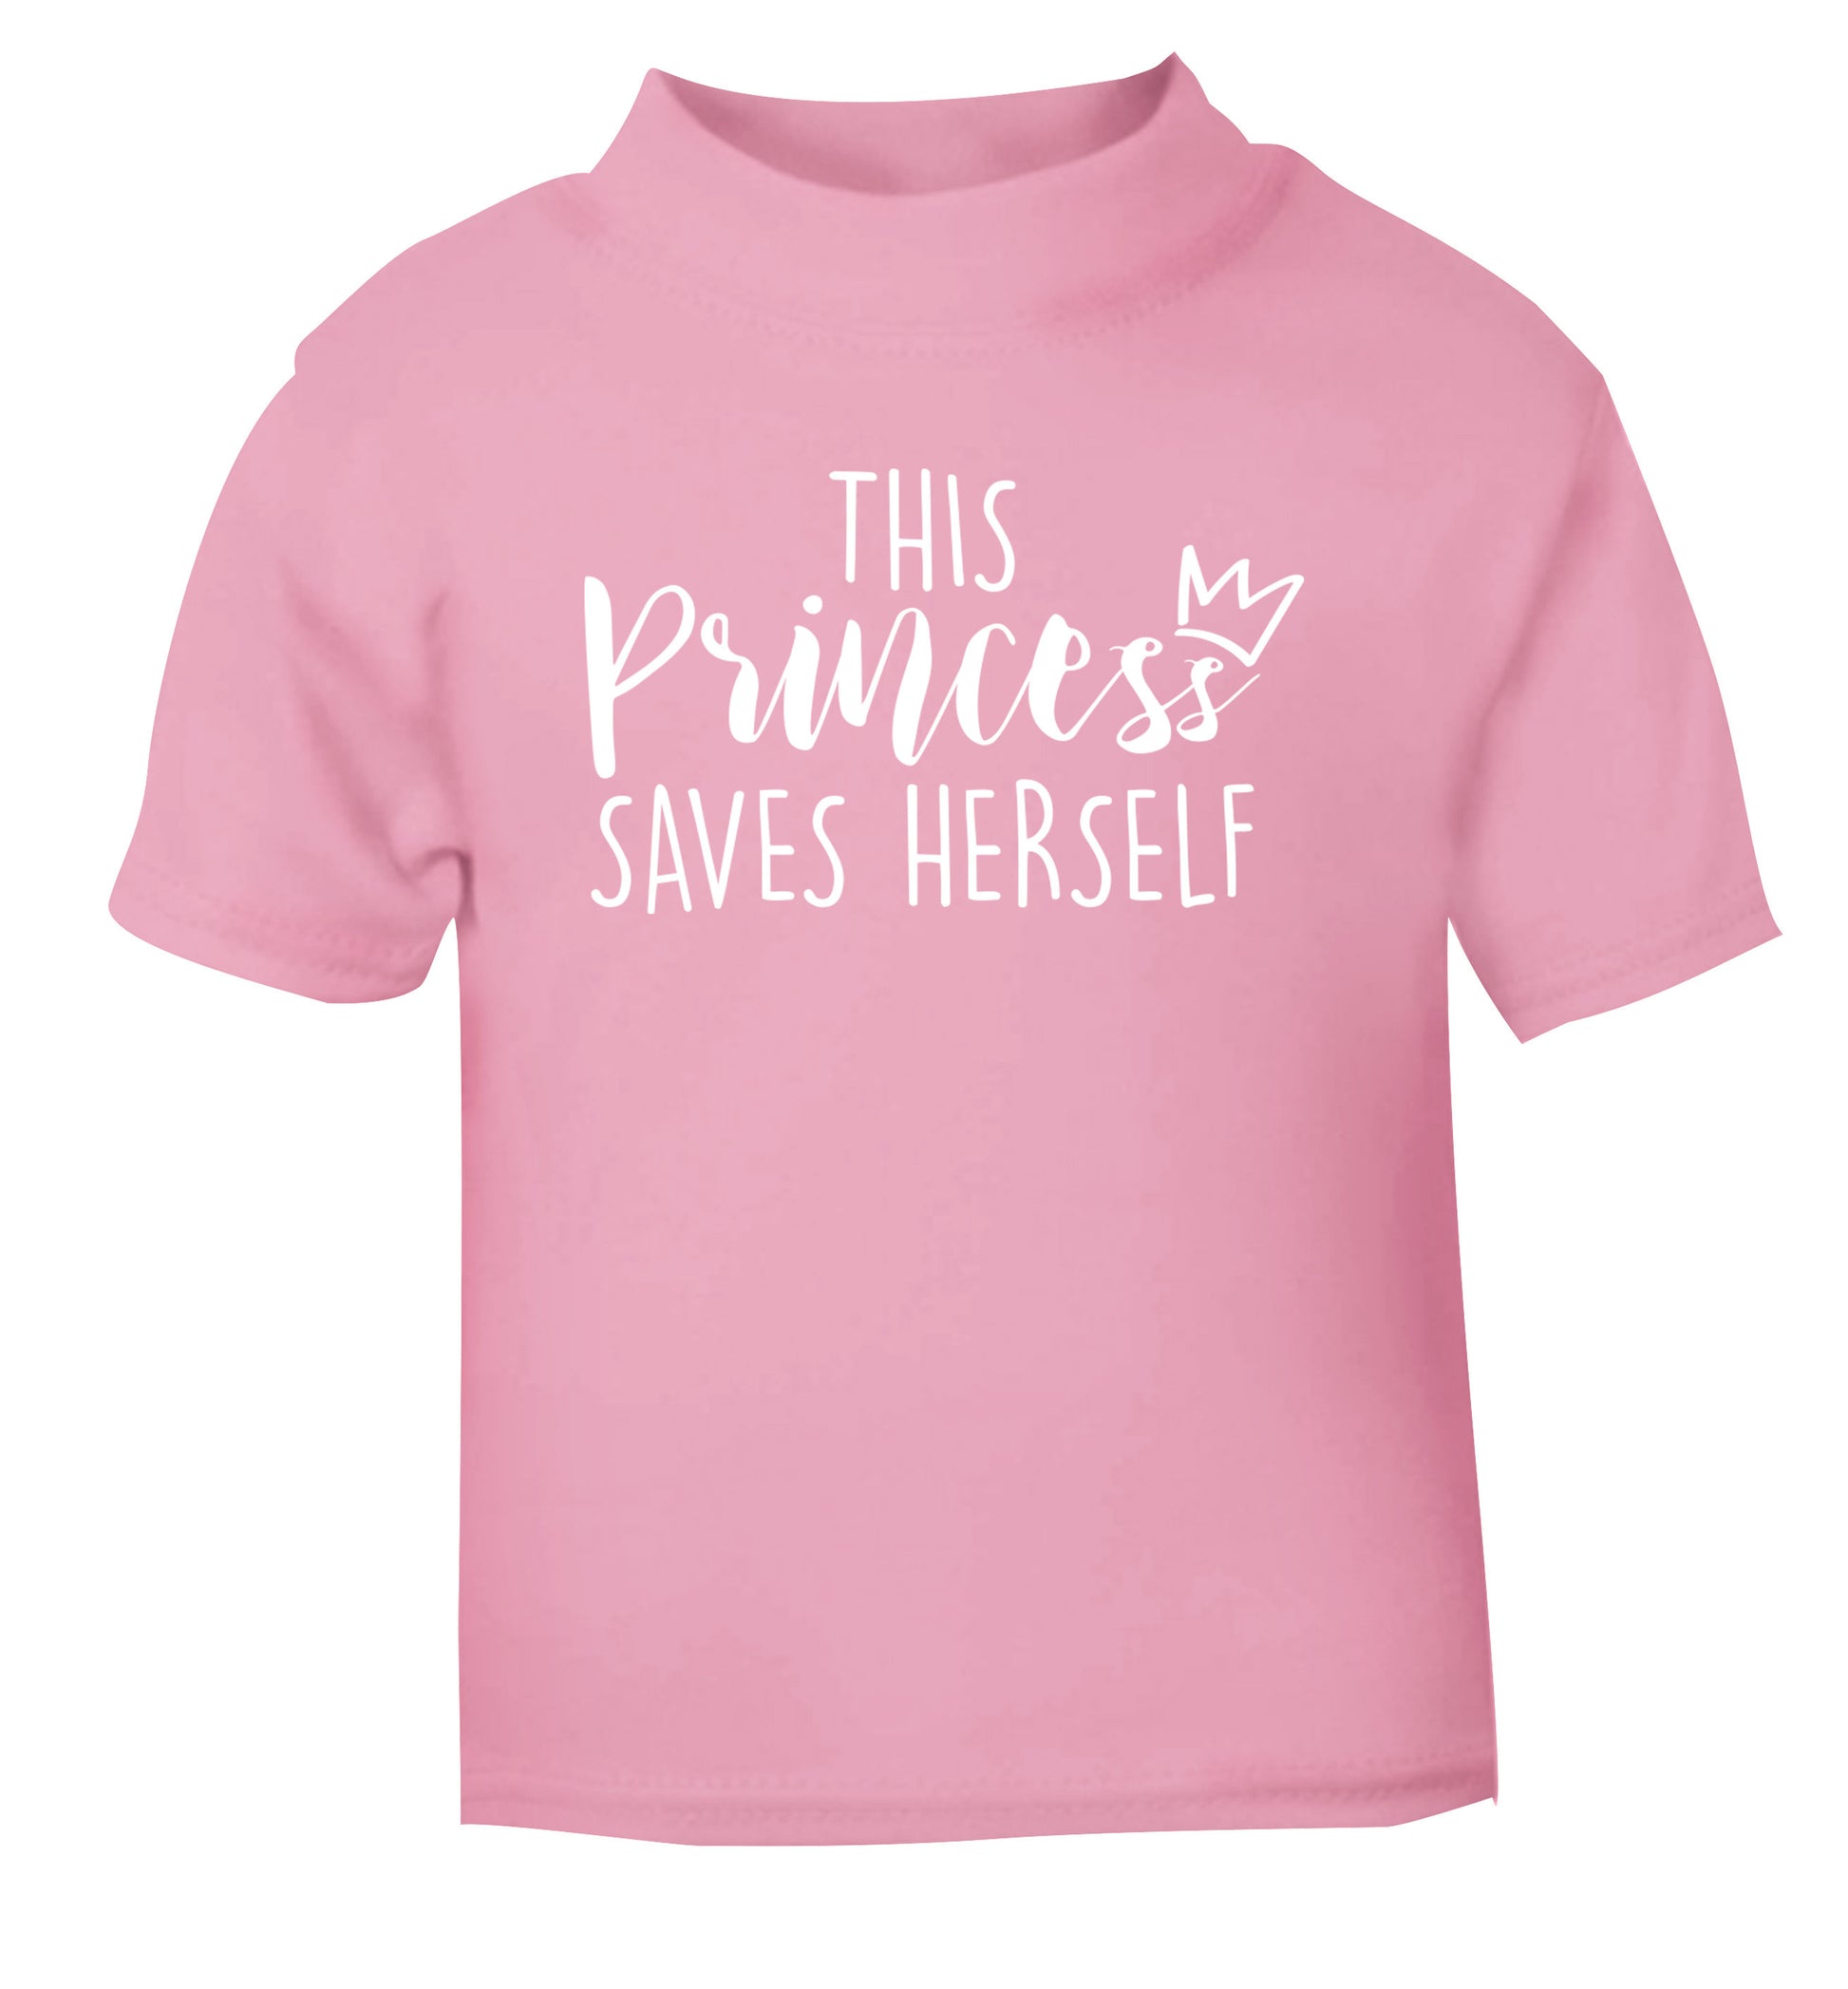 This princess saves herself light pink Baby Toddler Tshirt 2 Years